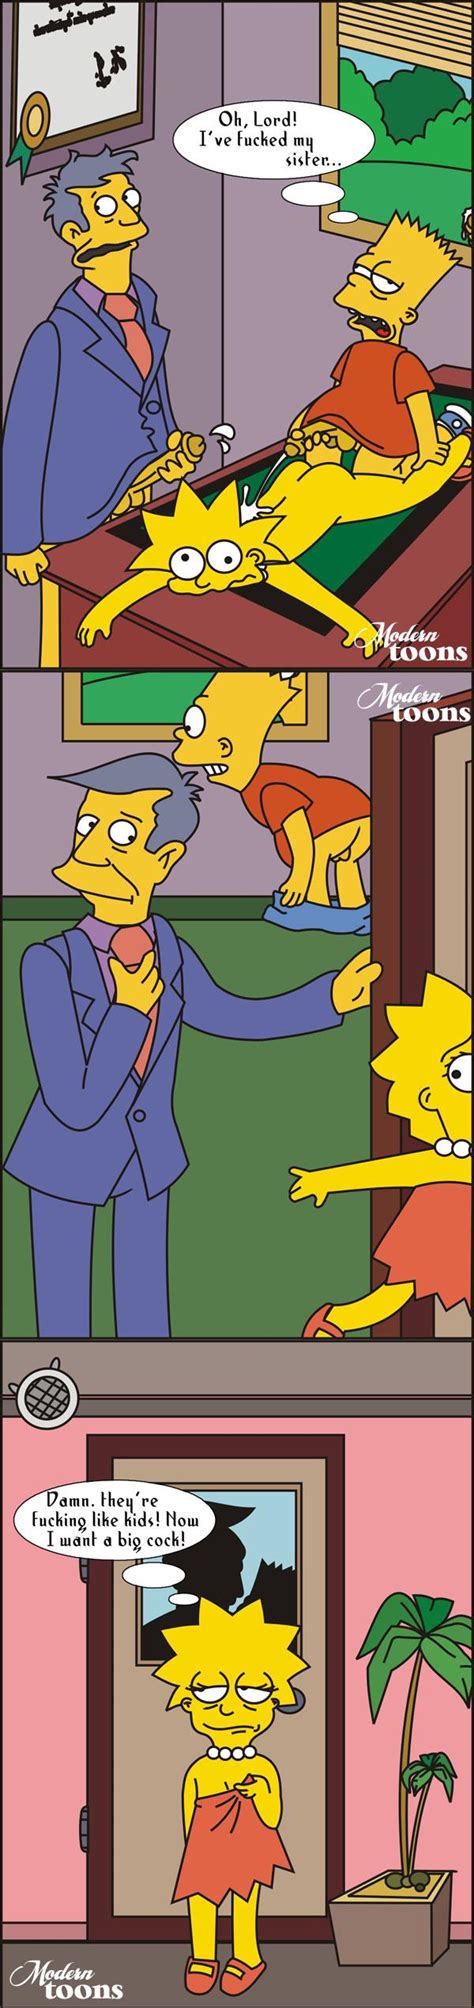 Post 499789 Bart Simpson Lisa Simpson Modern Toons Seymour Skinner The Simpsons